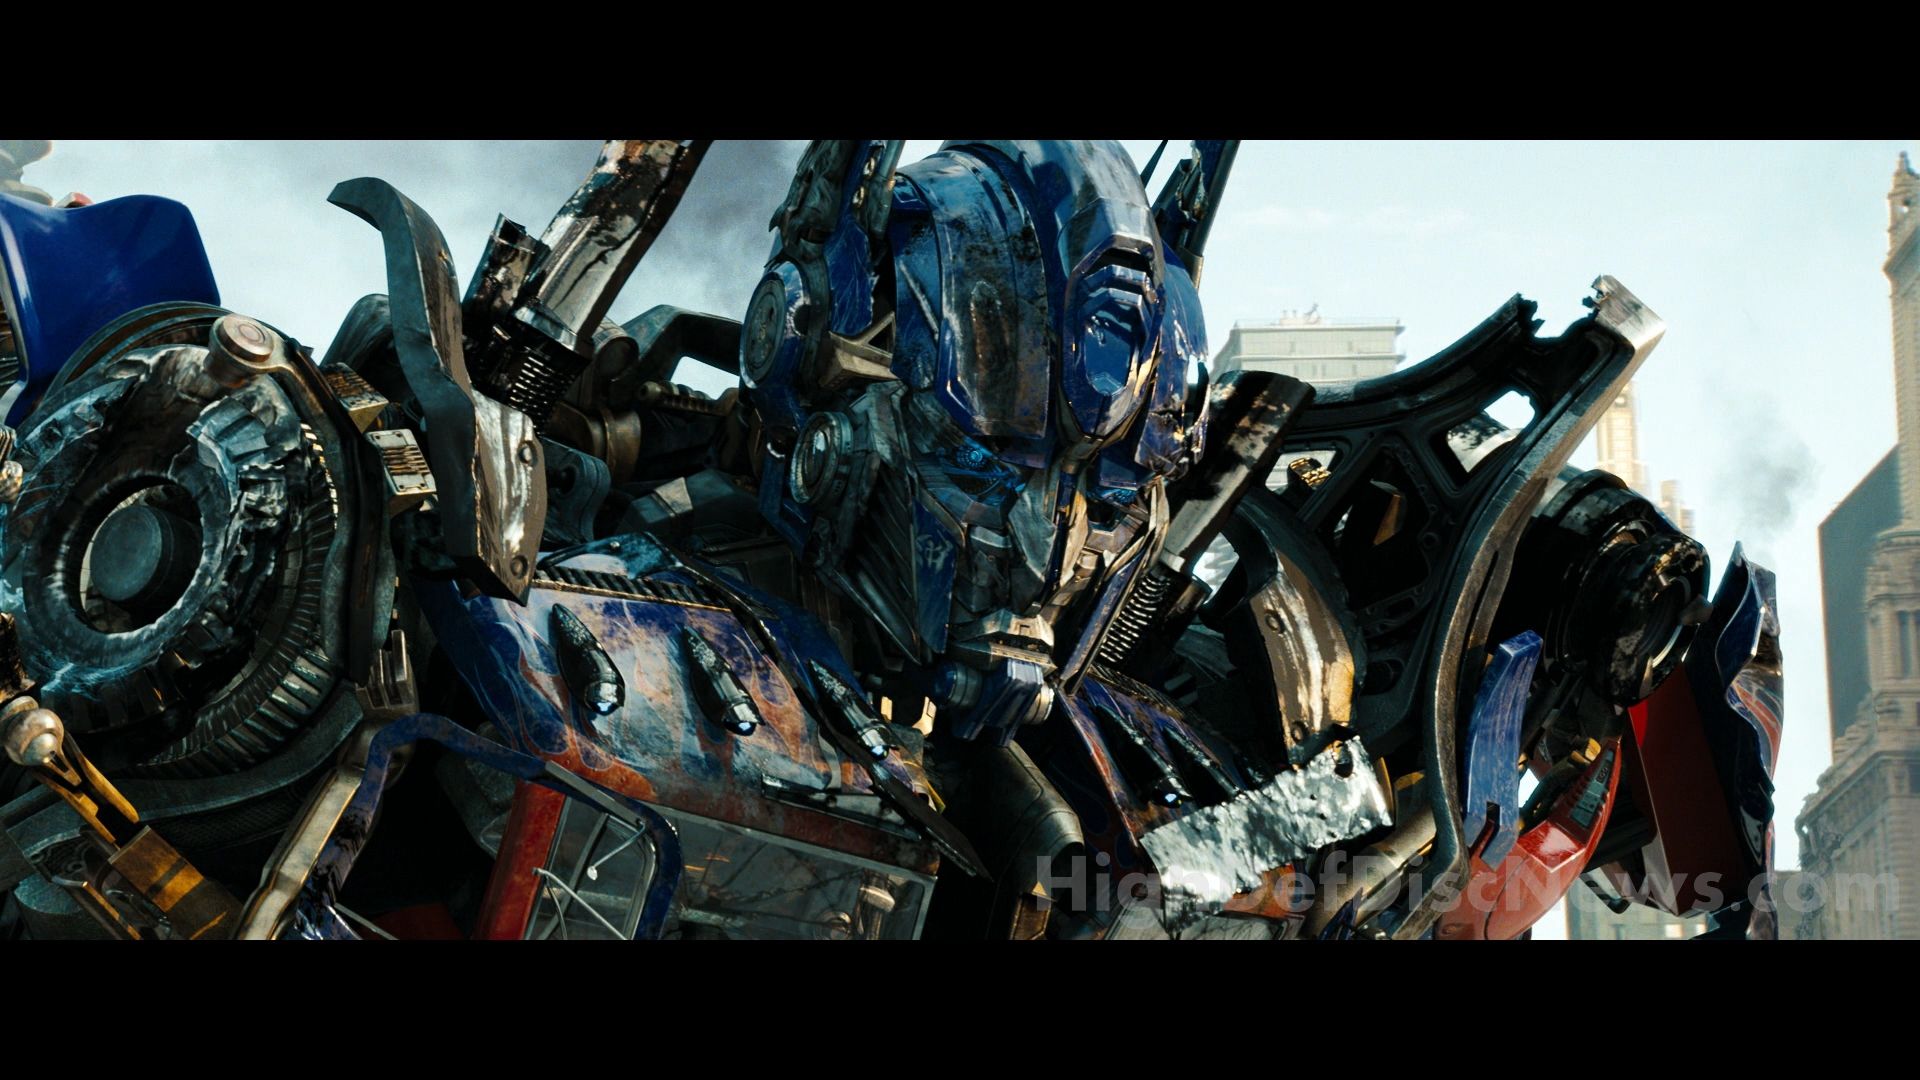 Optimus prime face transformers hd